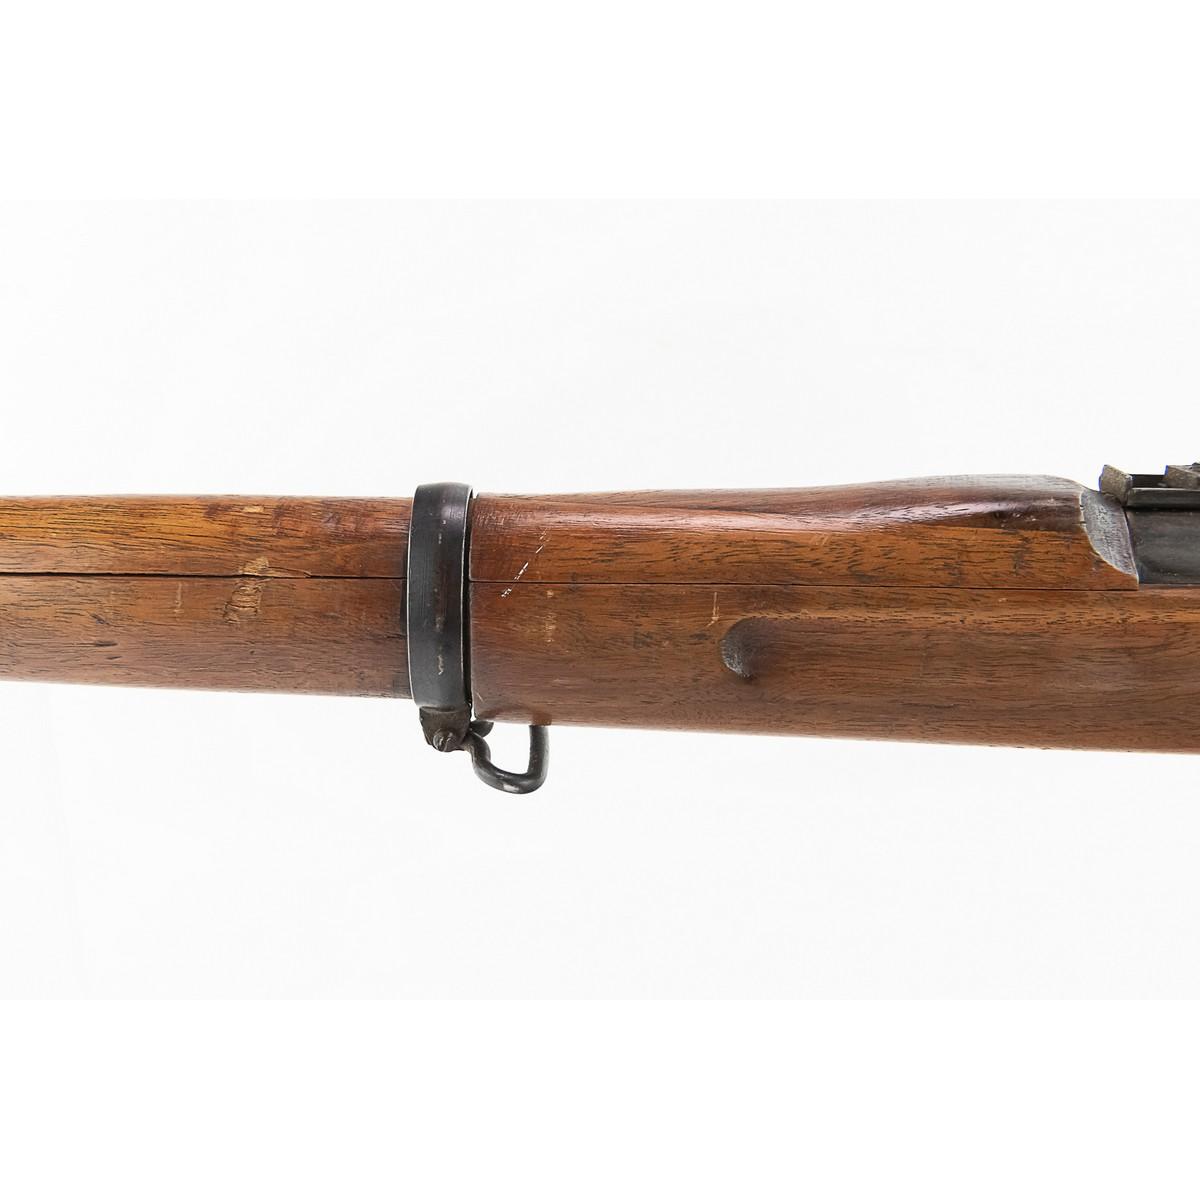 WWI US M1903 Springfield Training Rifle